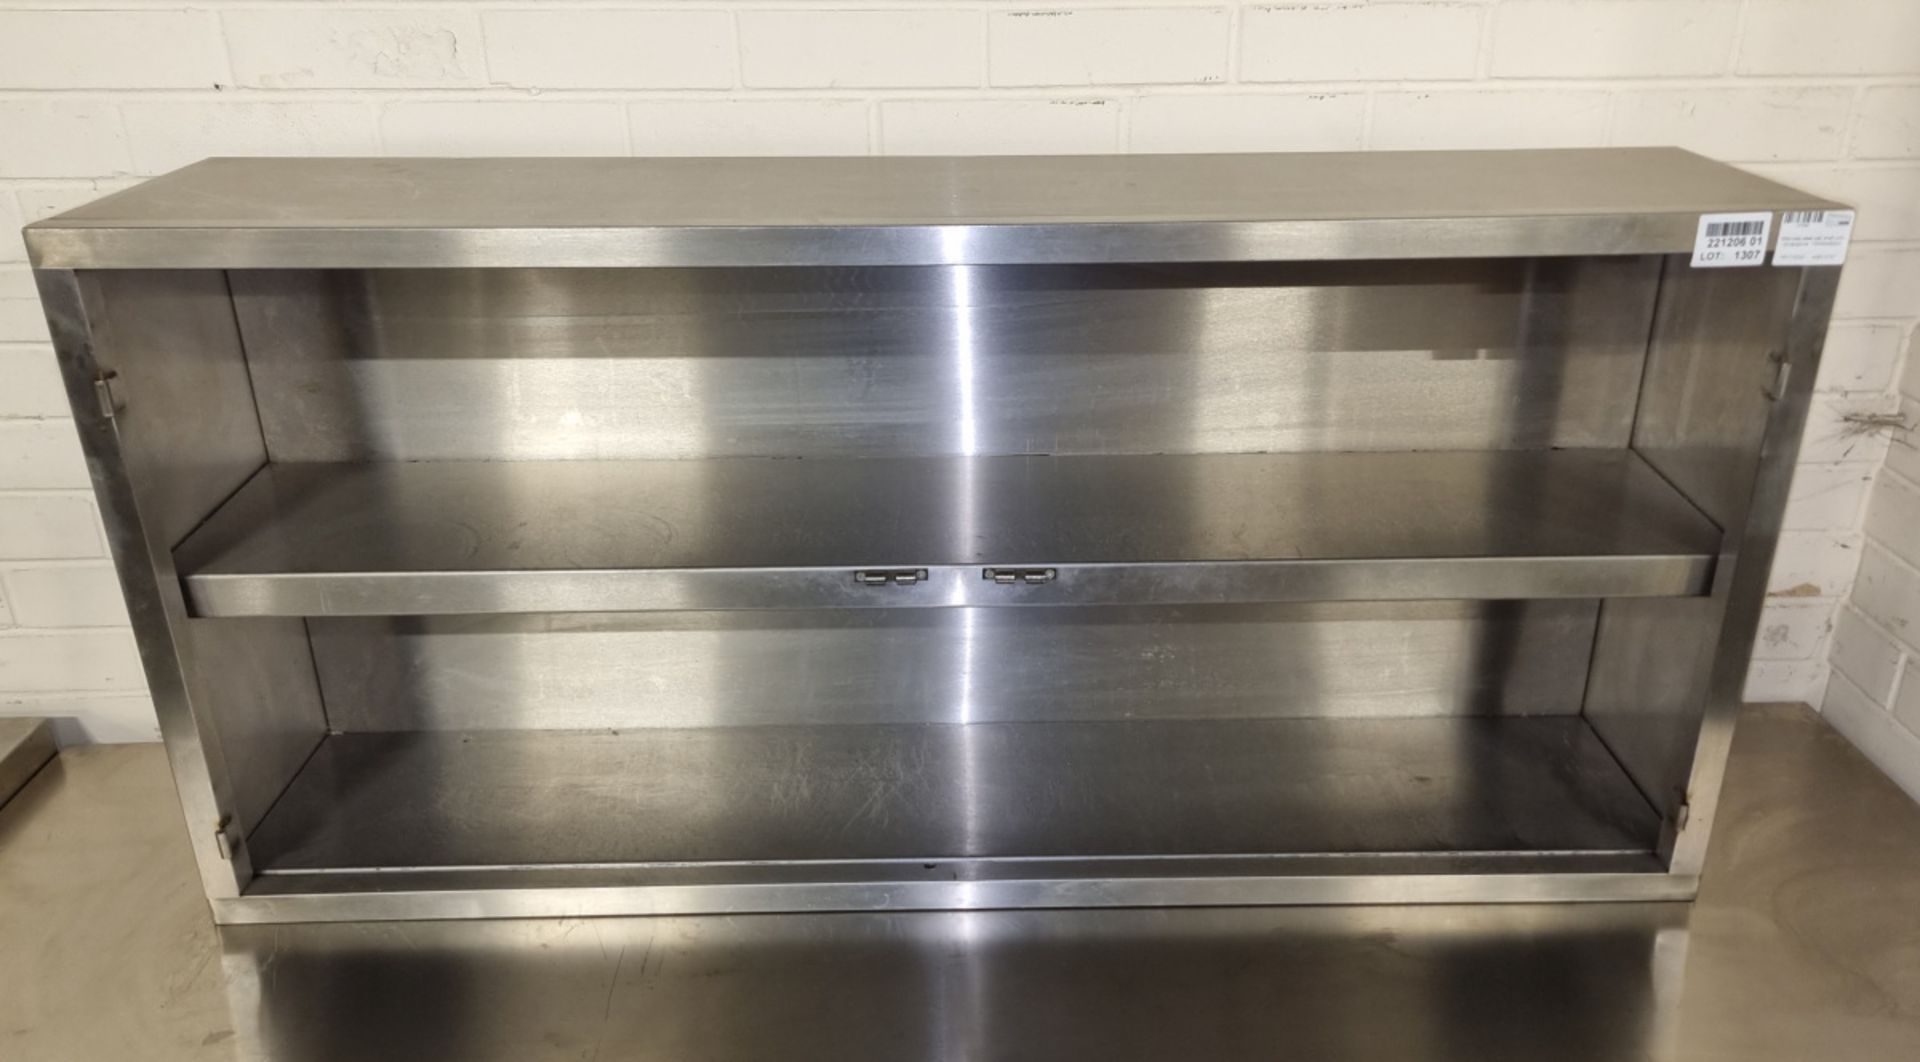 Stainless steel wall shelf unit - dimensions: 130x30x60cm